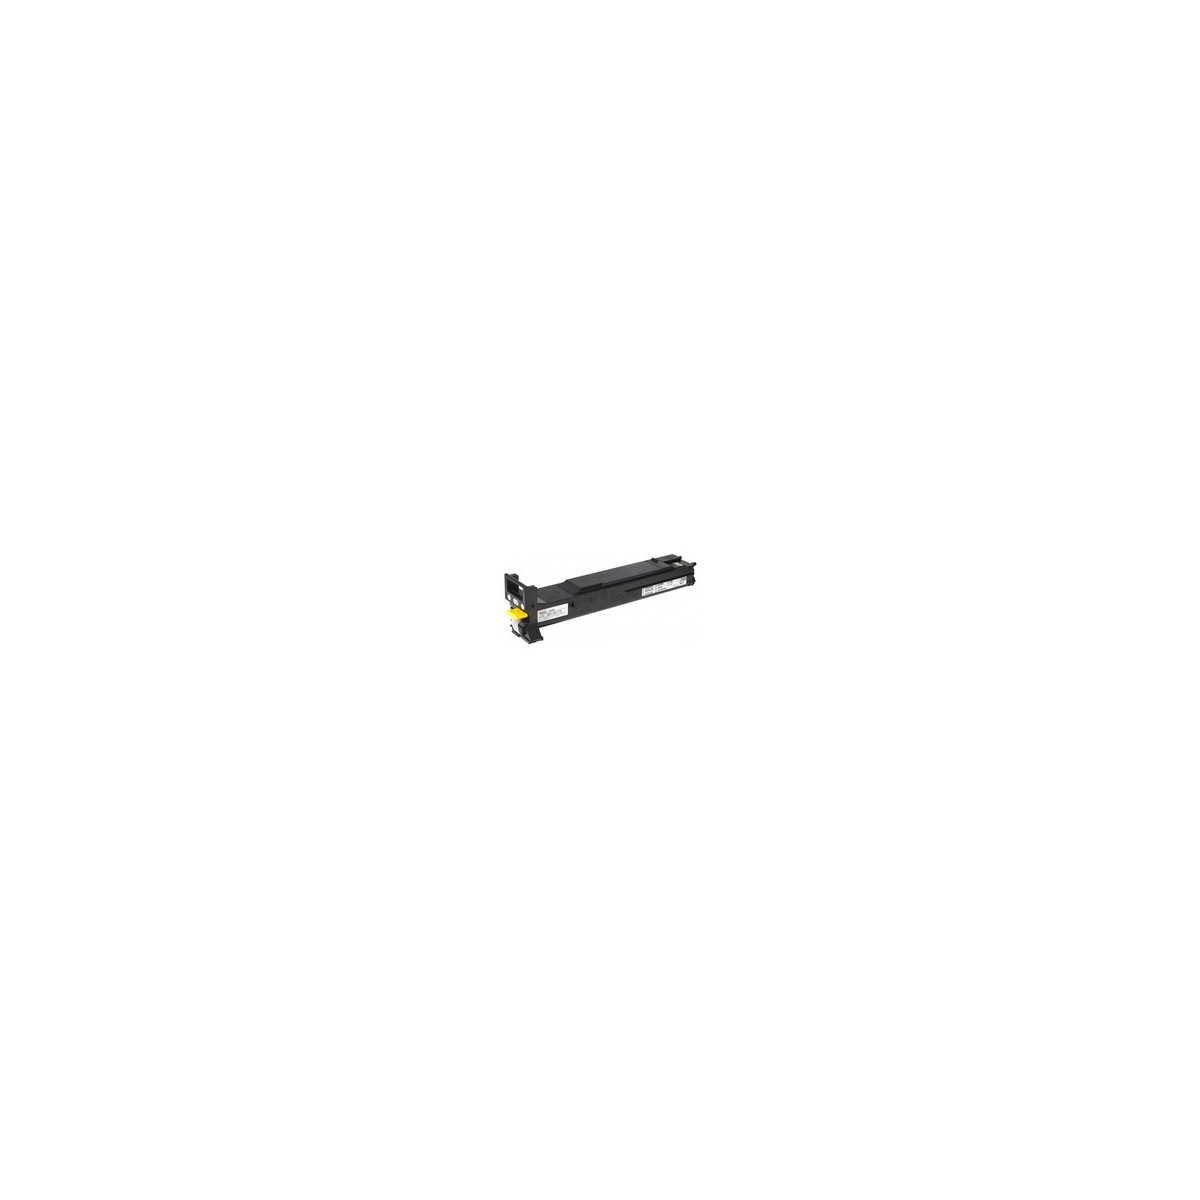 Konica Minolta Black Toner Cartridge for MagiColor 5550-5570 - 6000 pages - Black - 1 pc(s)